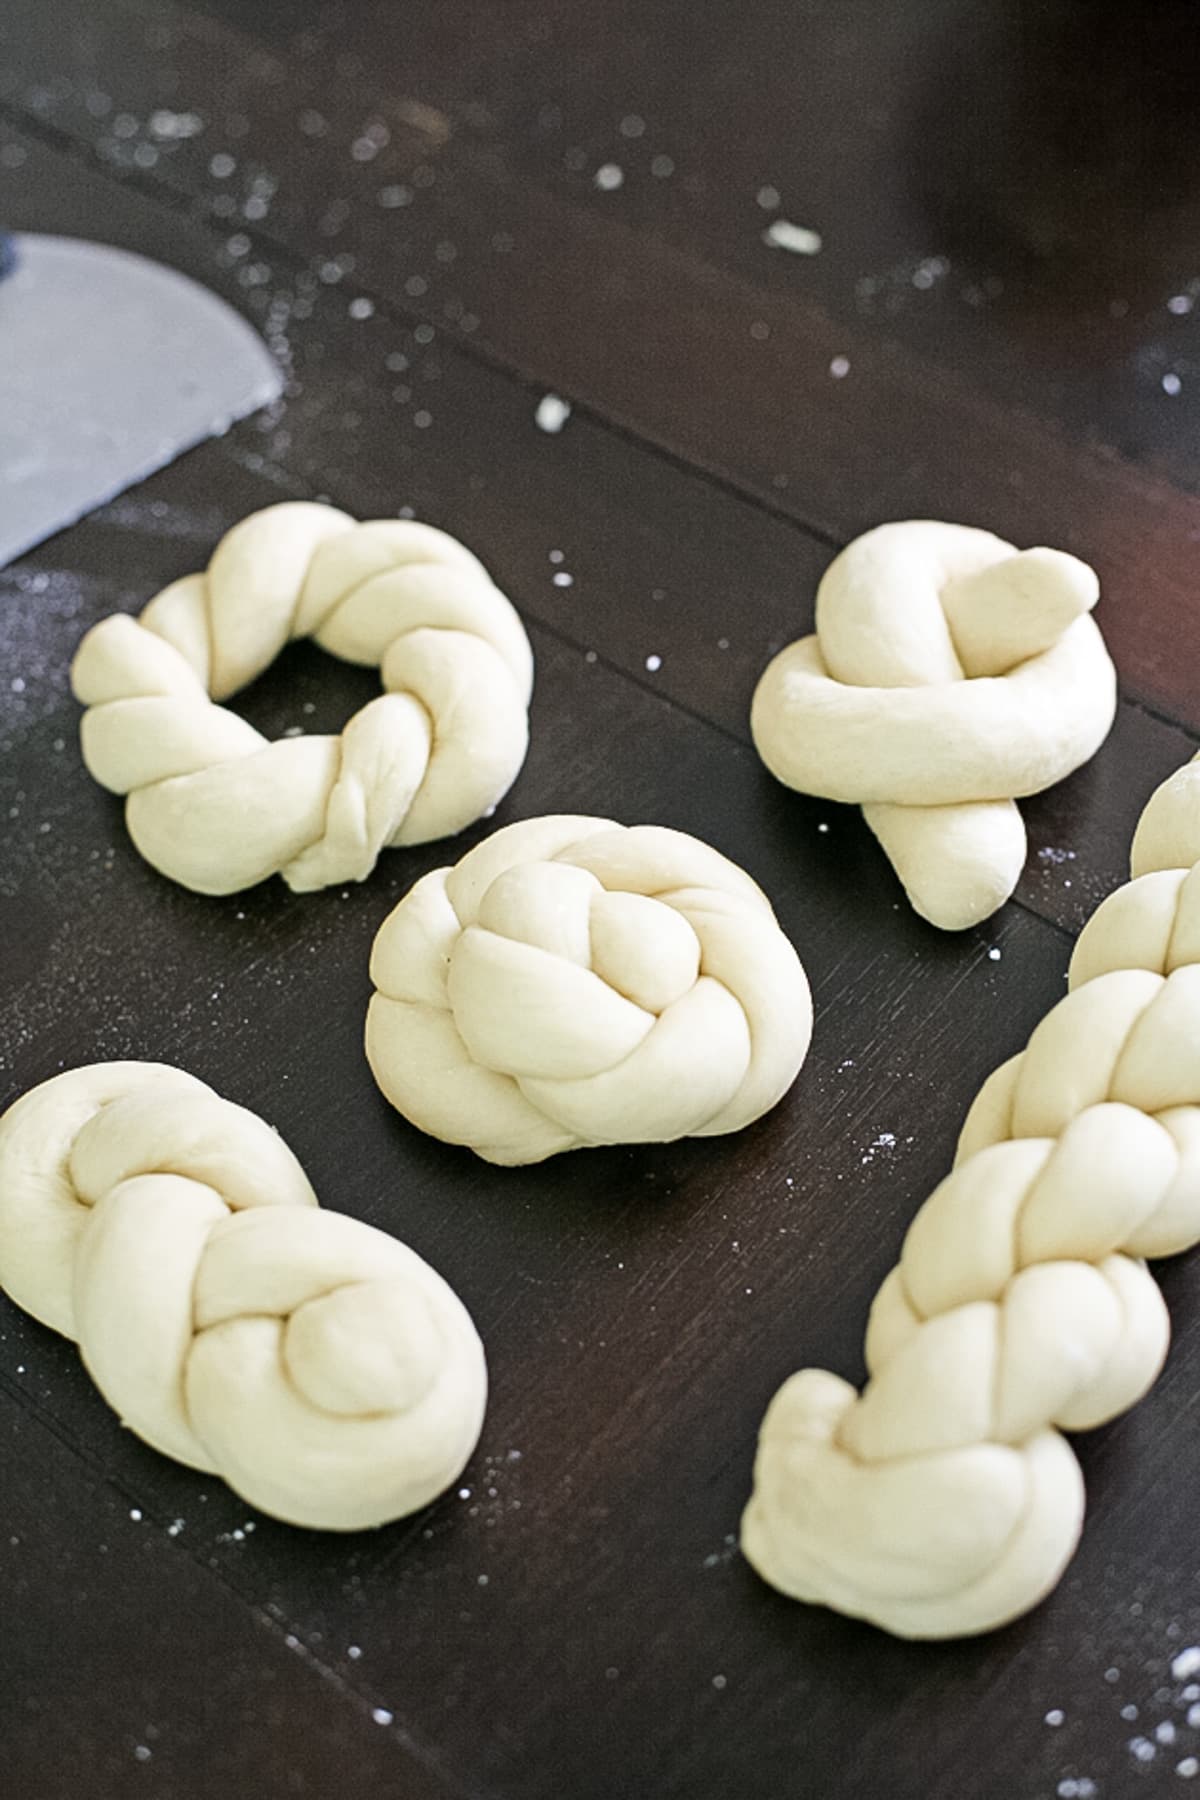 all the five challah bun designs before baking